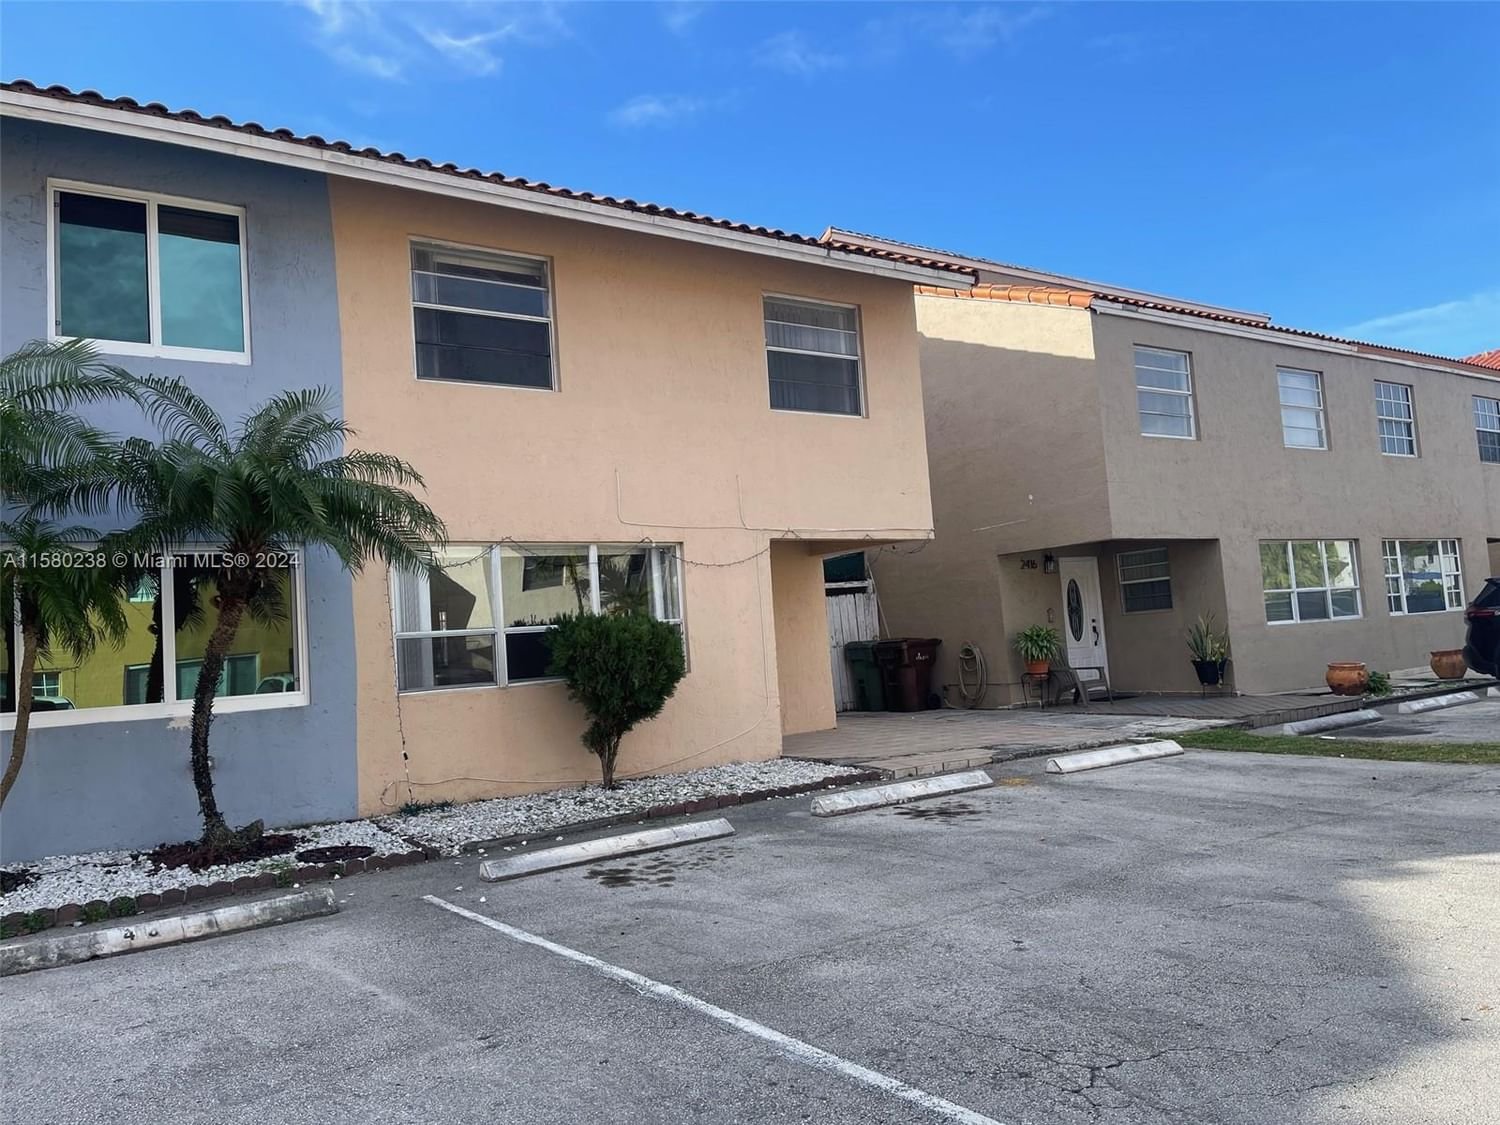 Real estate property located at 2412 54th Pl #06, Miami-Dade County, WEST VIEW VILLAS CONDO, Hialeah, FL